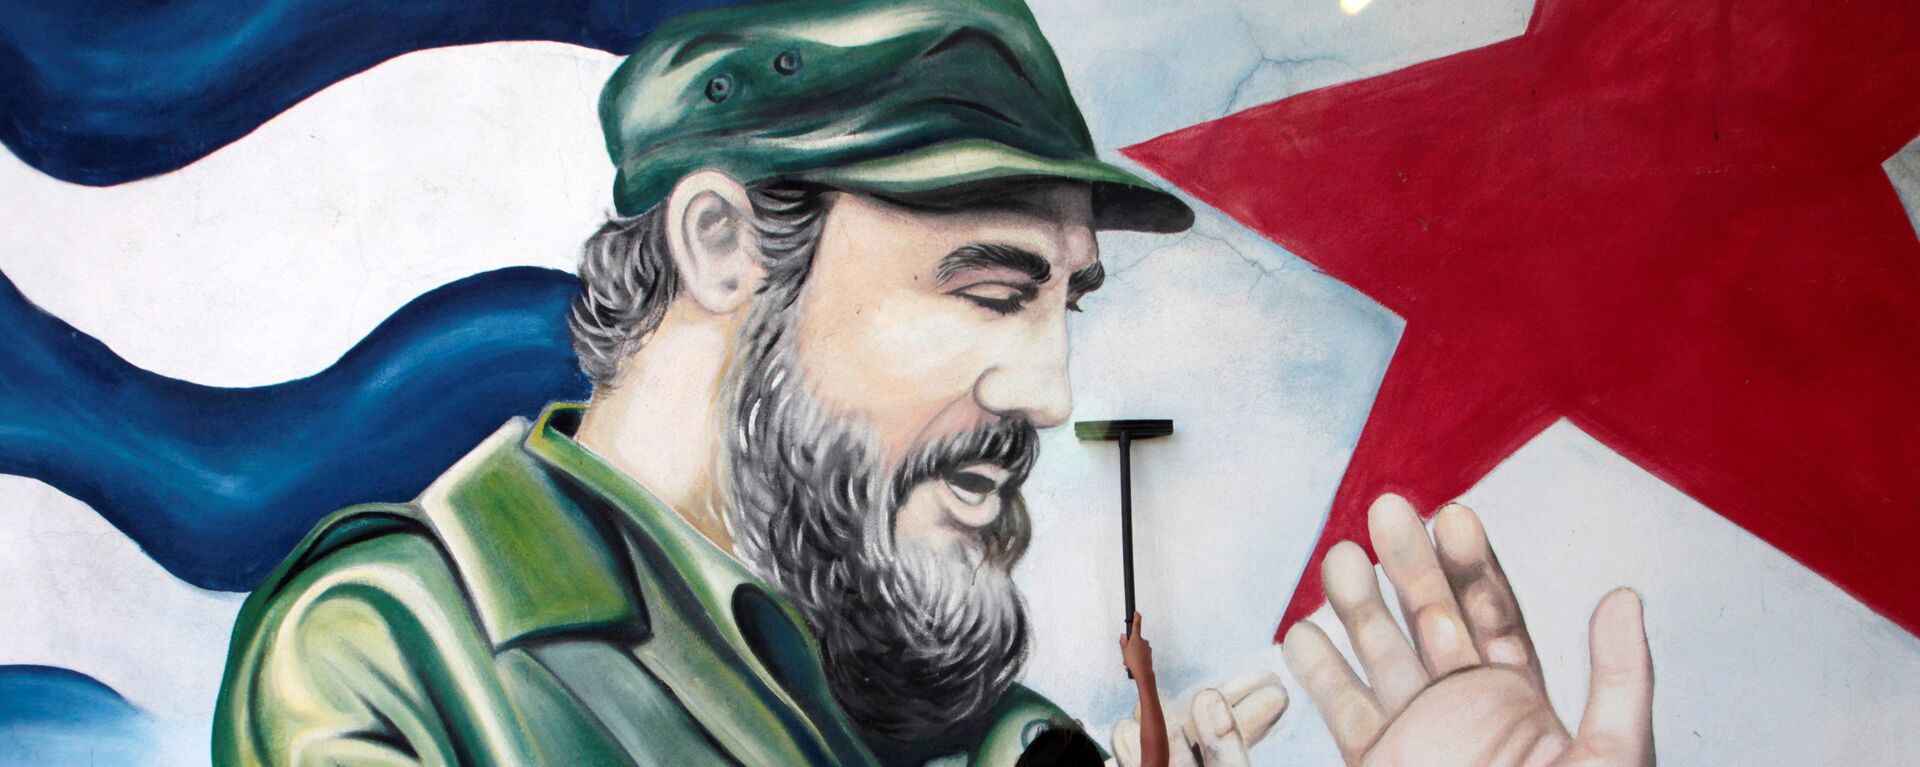 Mural bivšem kubanskom lideru Fidelu Kastru u Nikaragvi - Sputnik Srbija, 1920, 26.07.2020